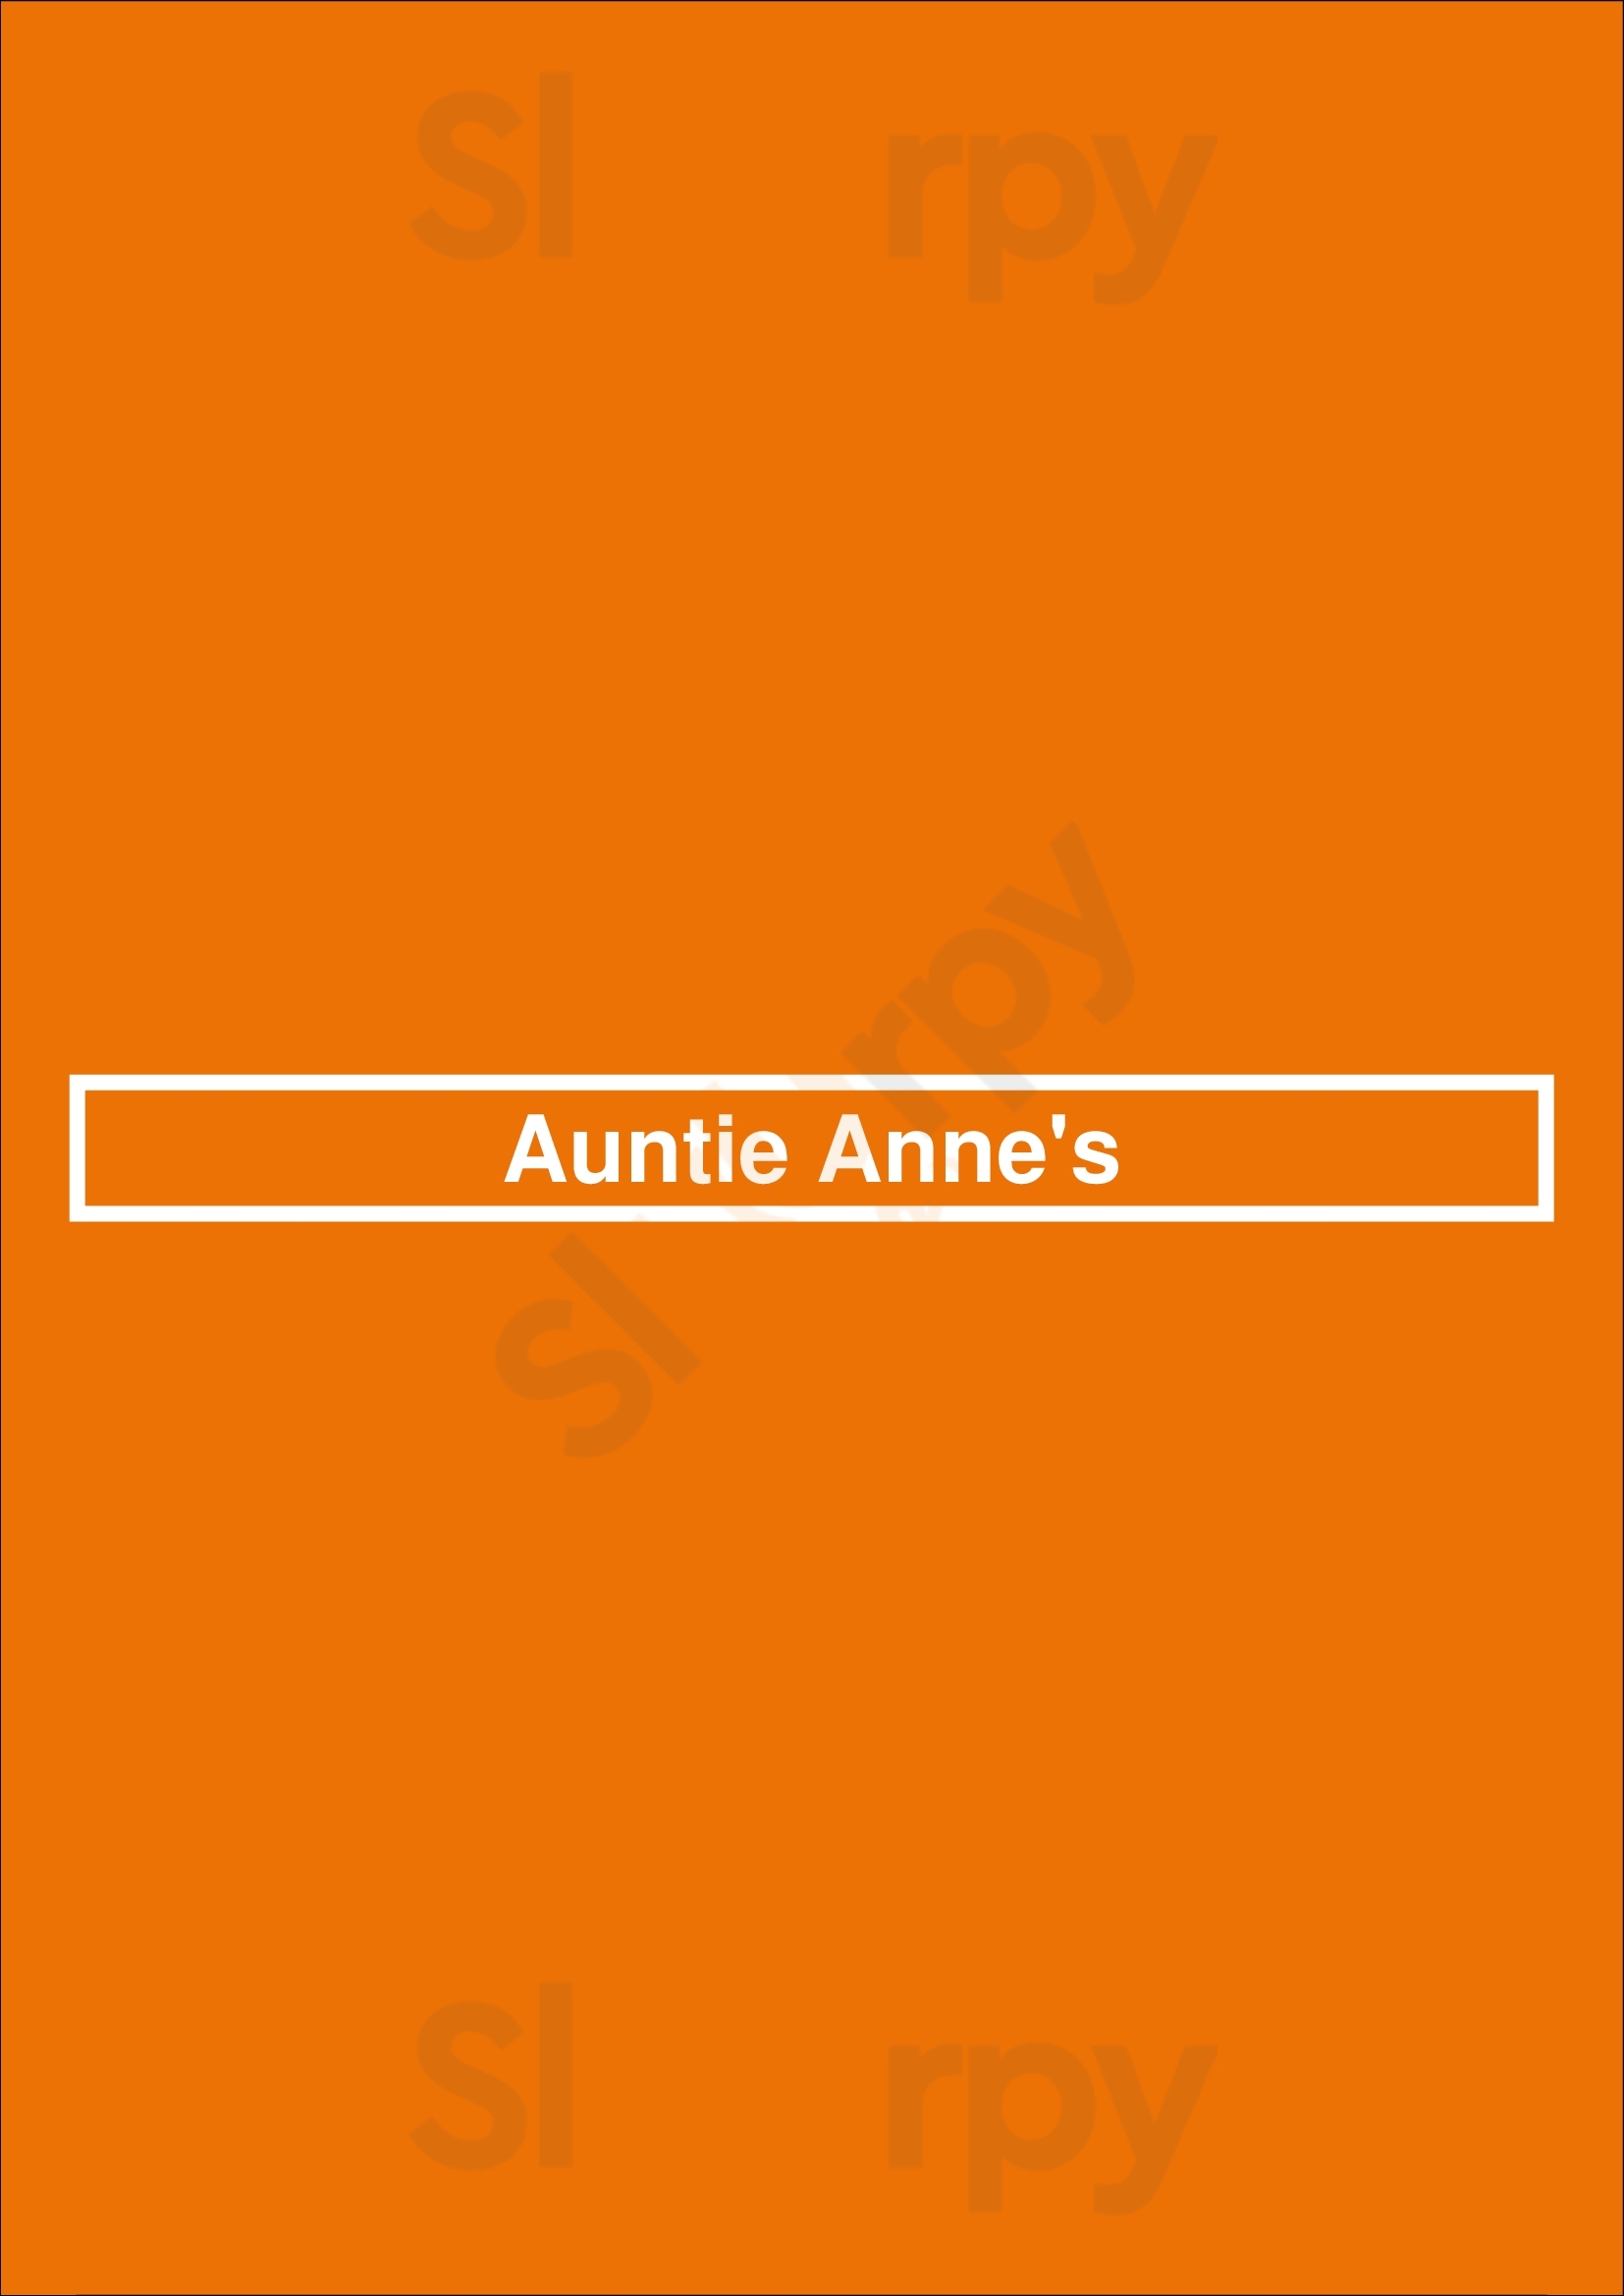 Auntie Anne's Baton Rouge Menu - 1